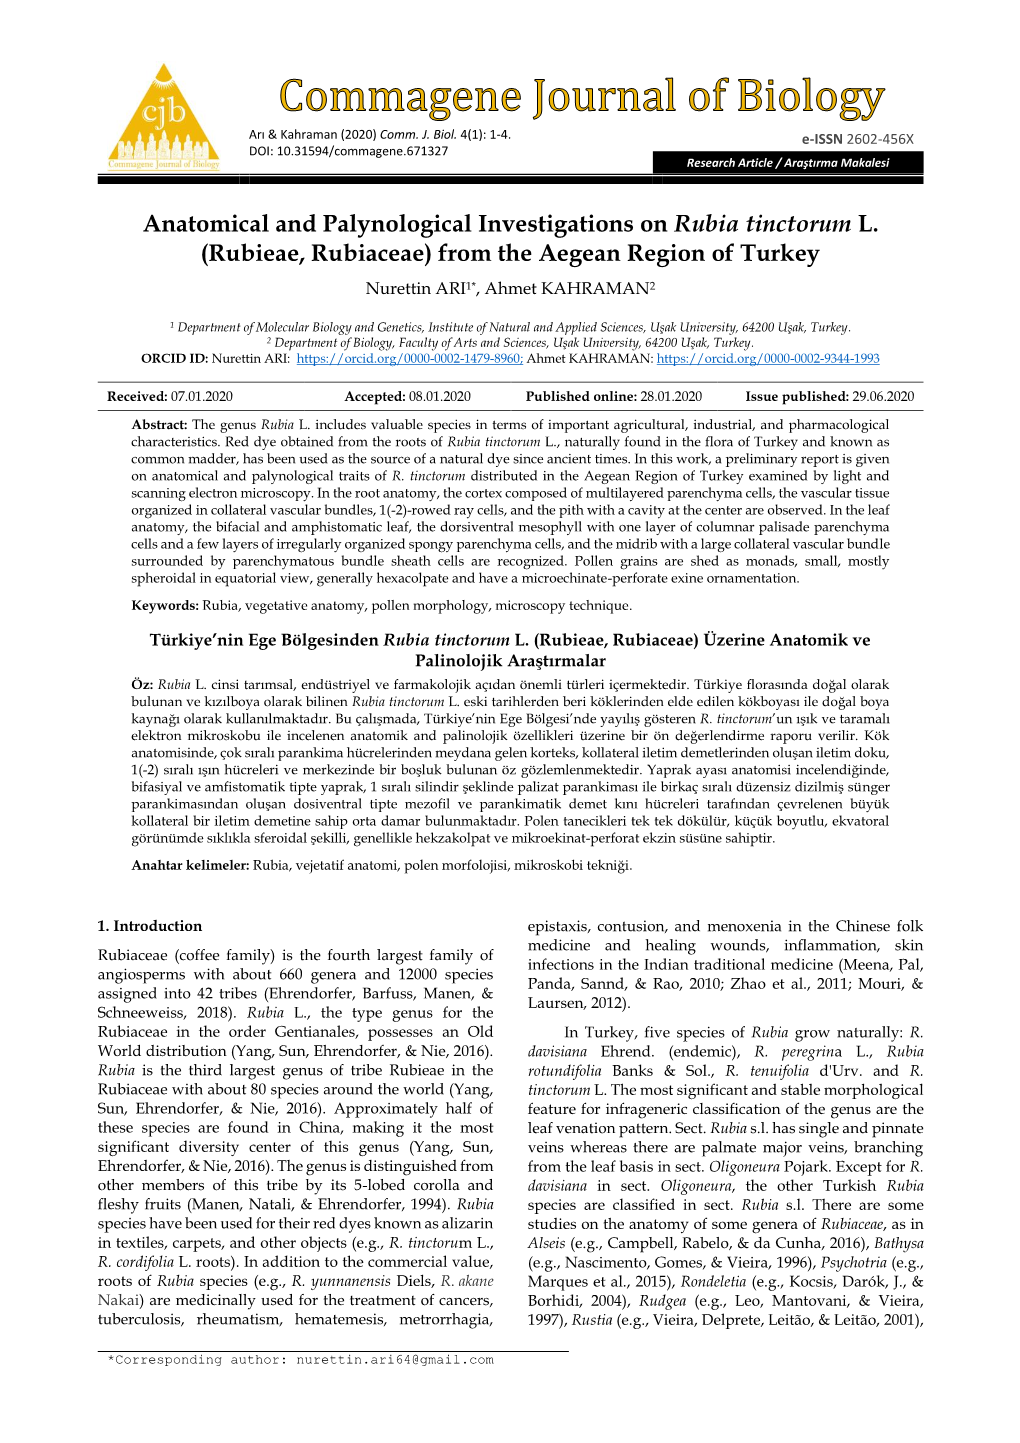 Anatomical and Palynological Investigations on Rubia Tinctorum L. (Rubieae, Rubiaceae) from the Aegean Region of Turkey Nurettin ARI1*, Ahmet KAHRAMAN2